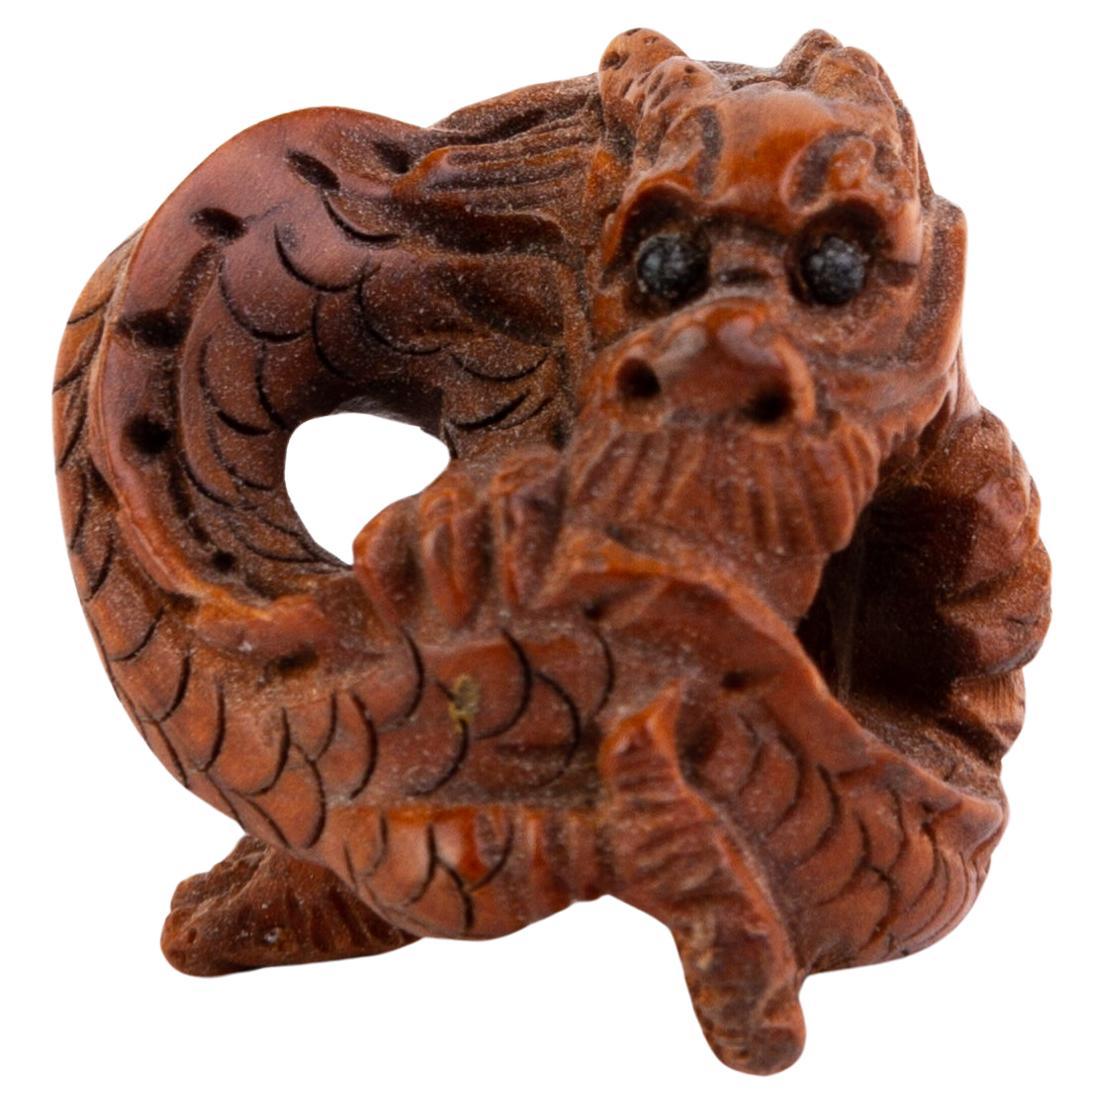 Signed Japanese Carved Wood Netsuke Inro Dragon